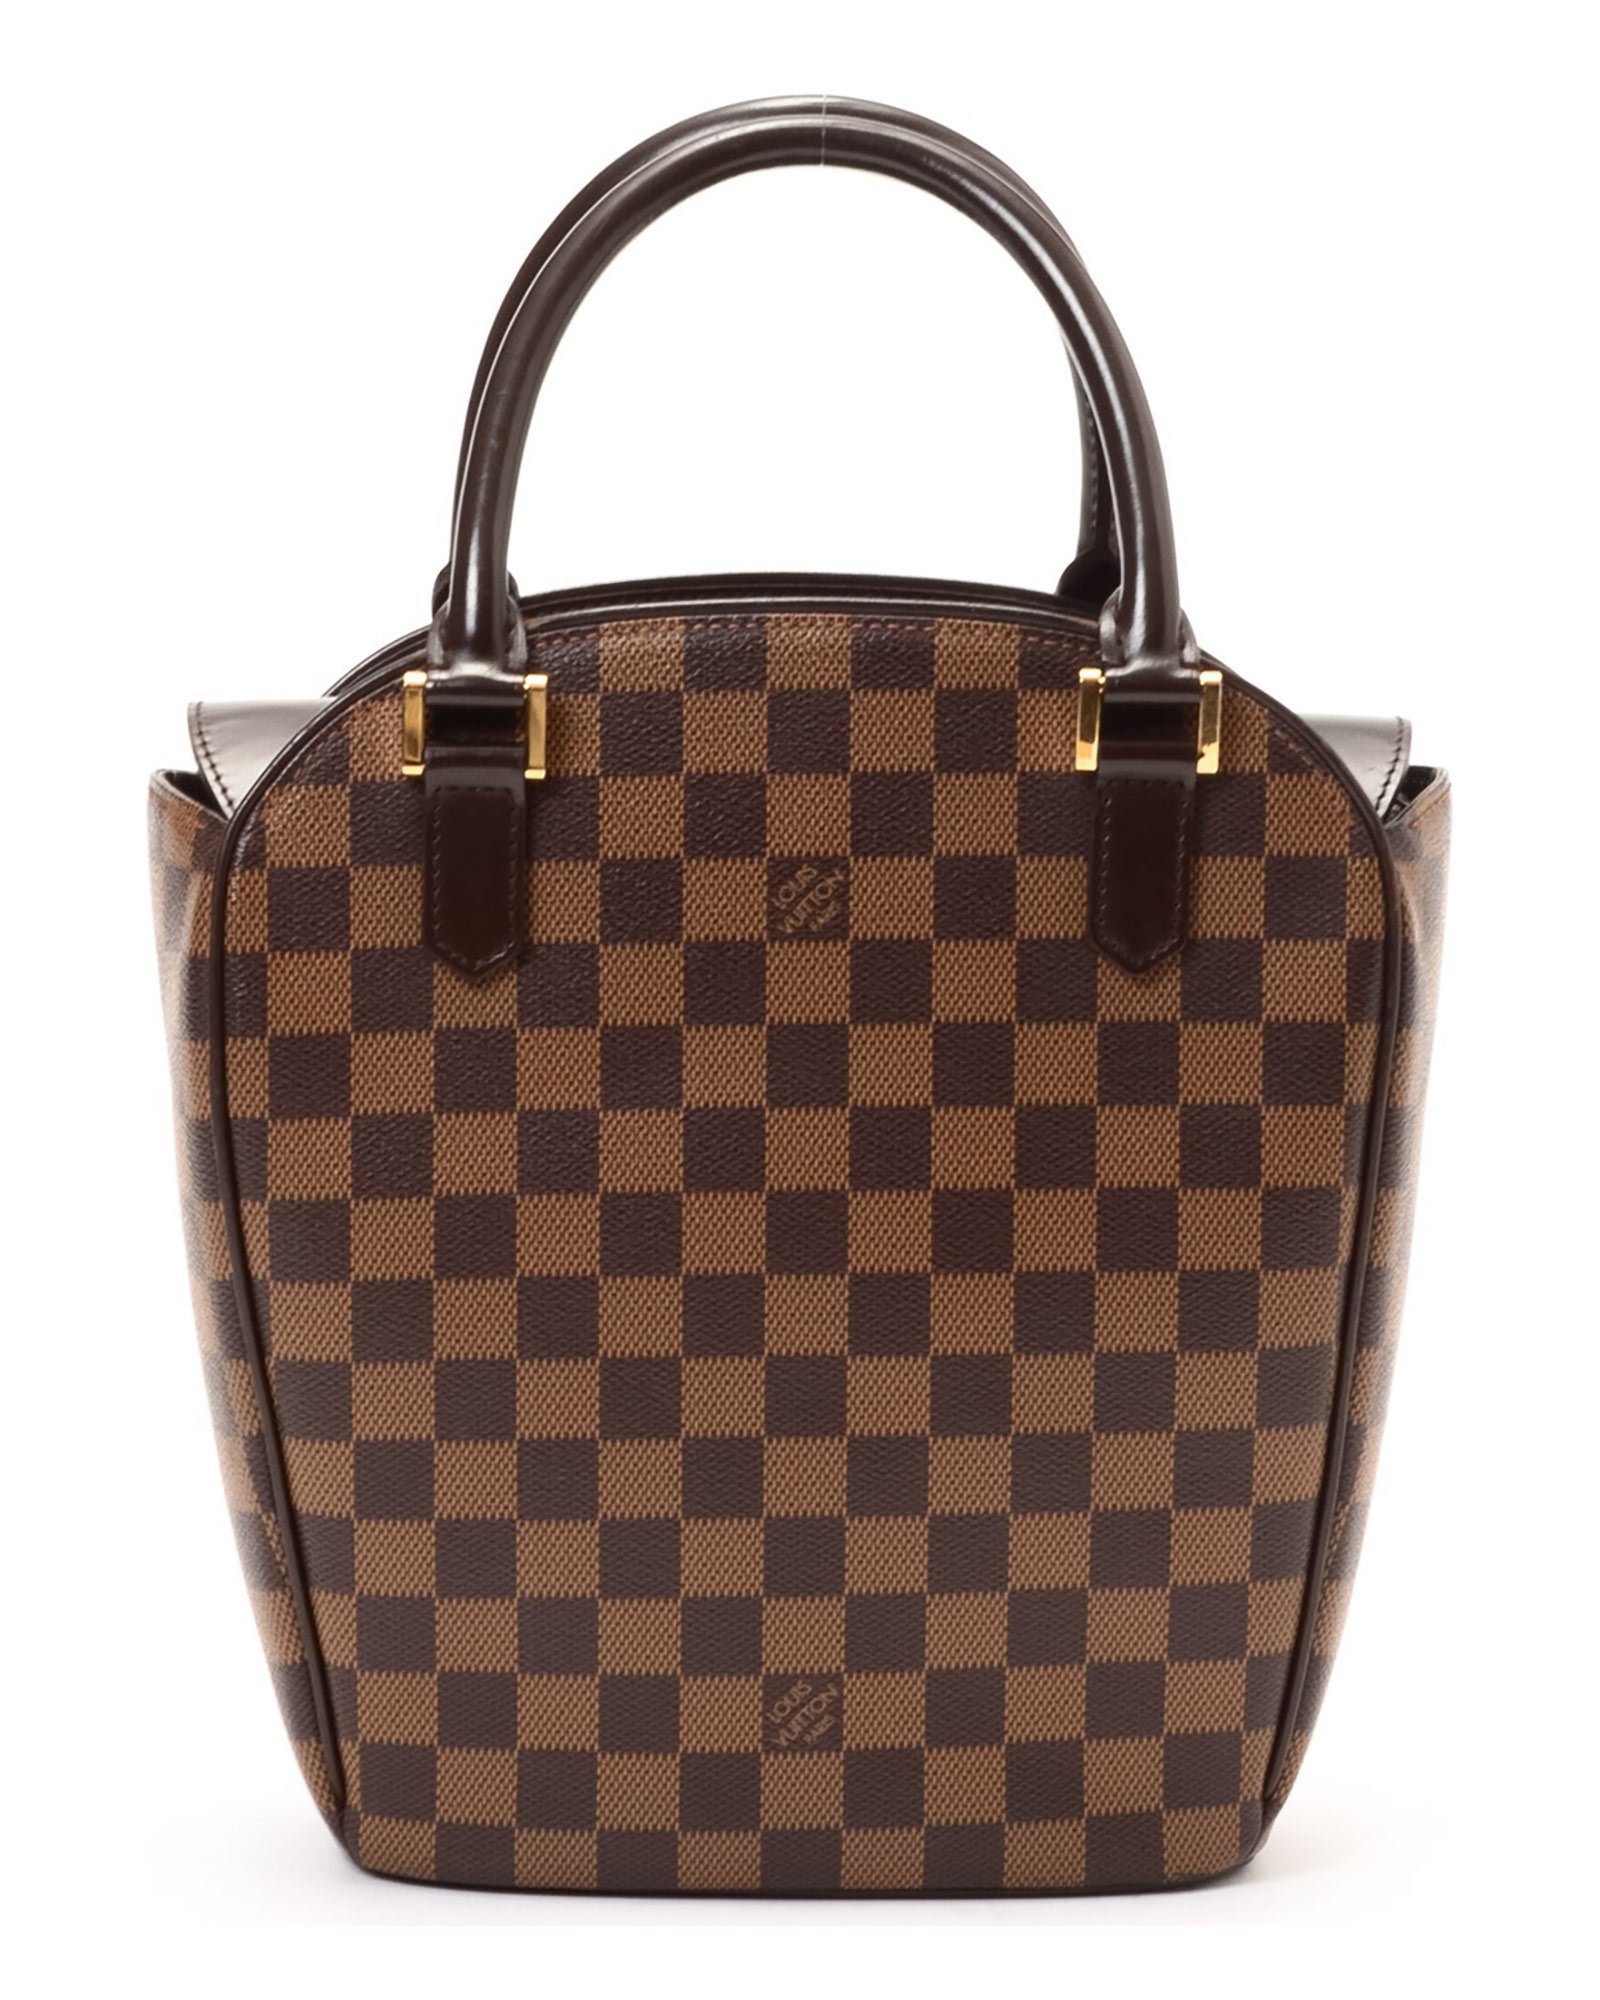 Lyst - Louis Vuitton Handbag - Vintage in Brown